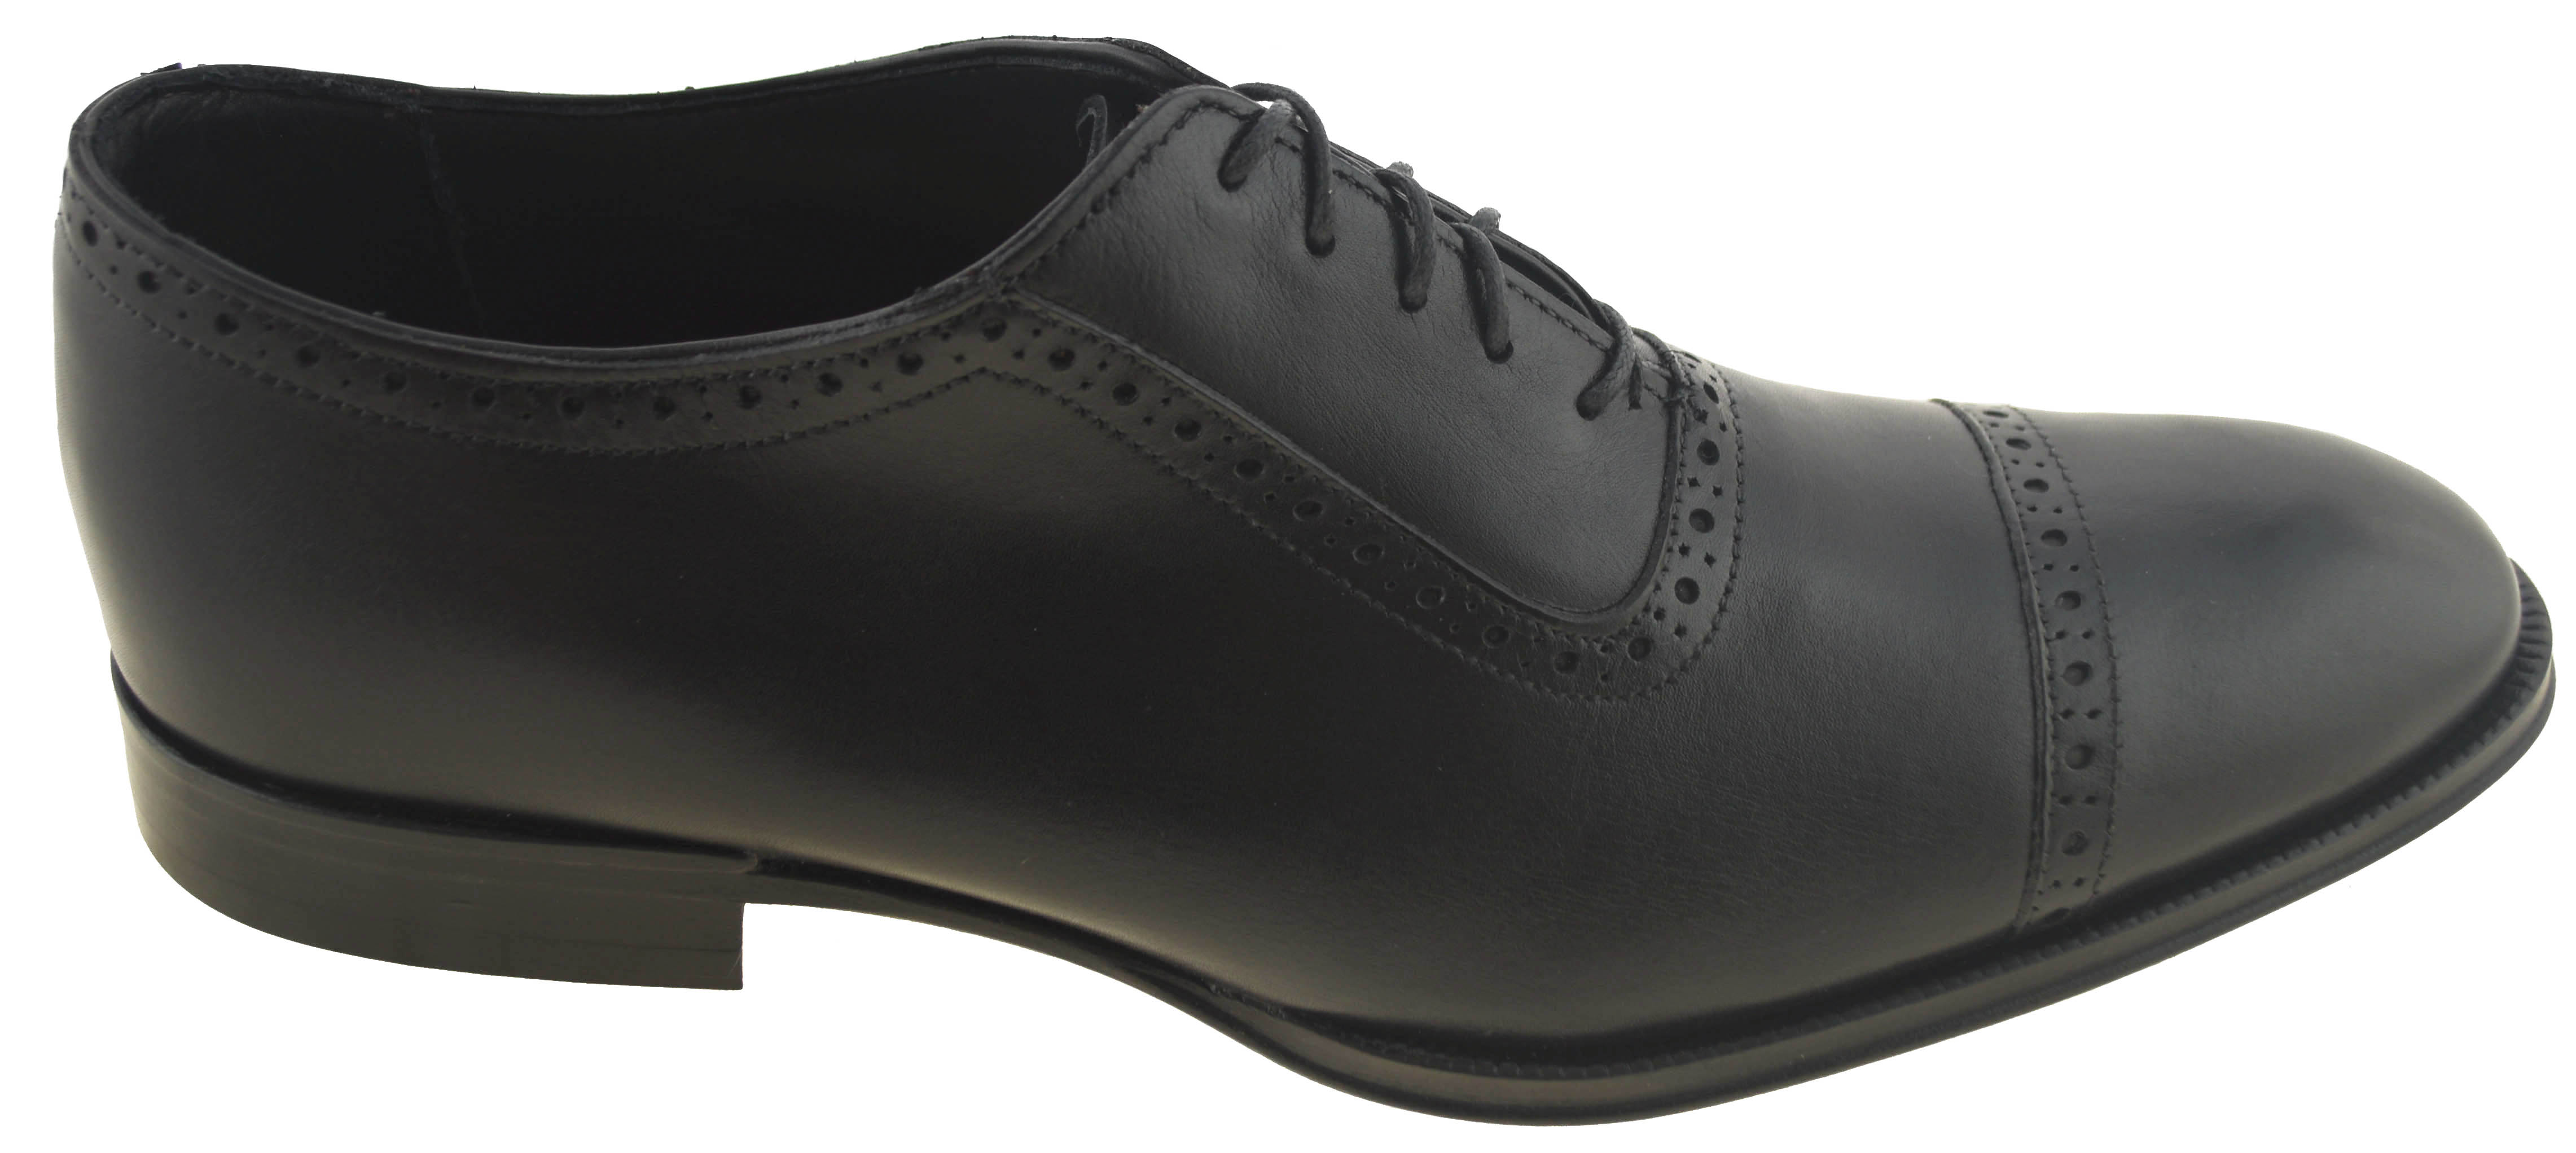 Allen Edmonds Men's Cap Toe Oxford Black Style 9112 48163 | eBay